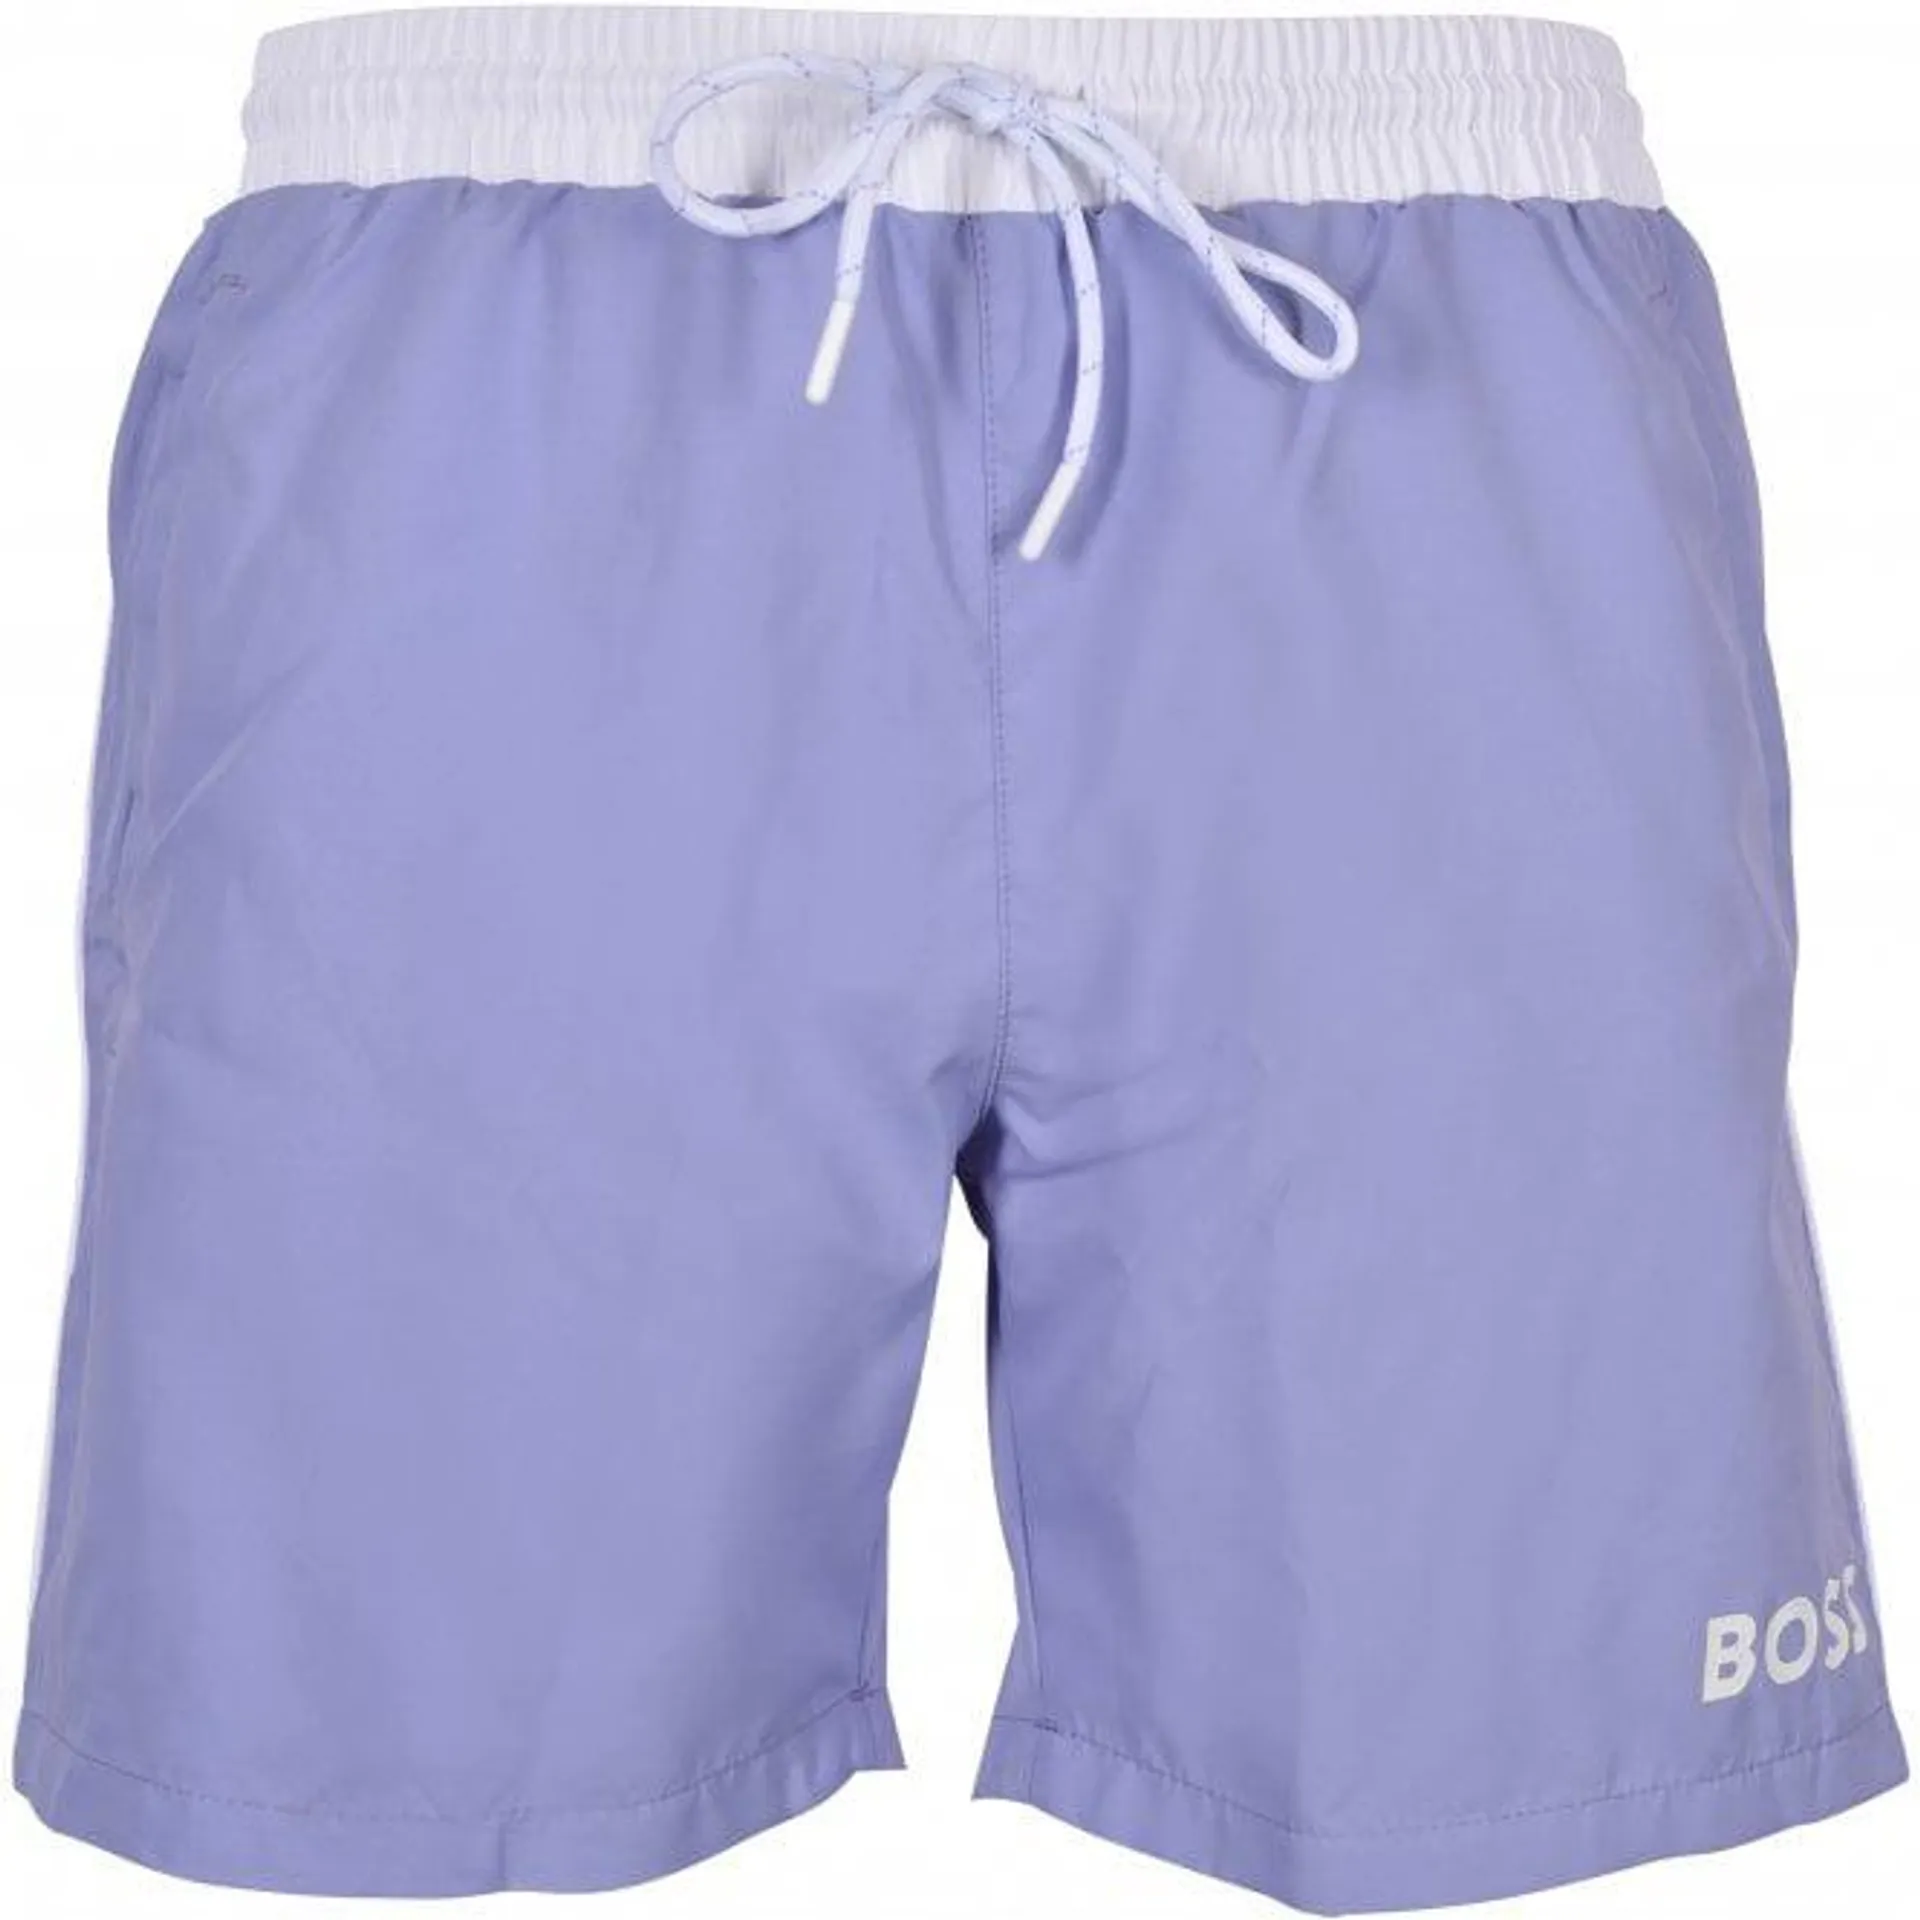 Starfish Swim Shorts, Light/Pastel Purple